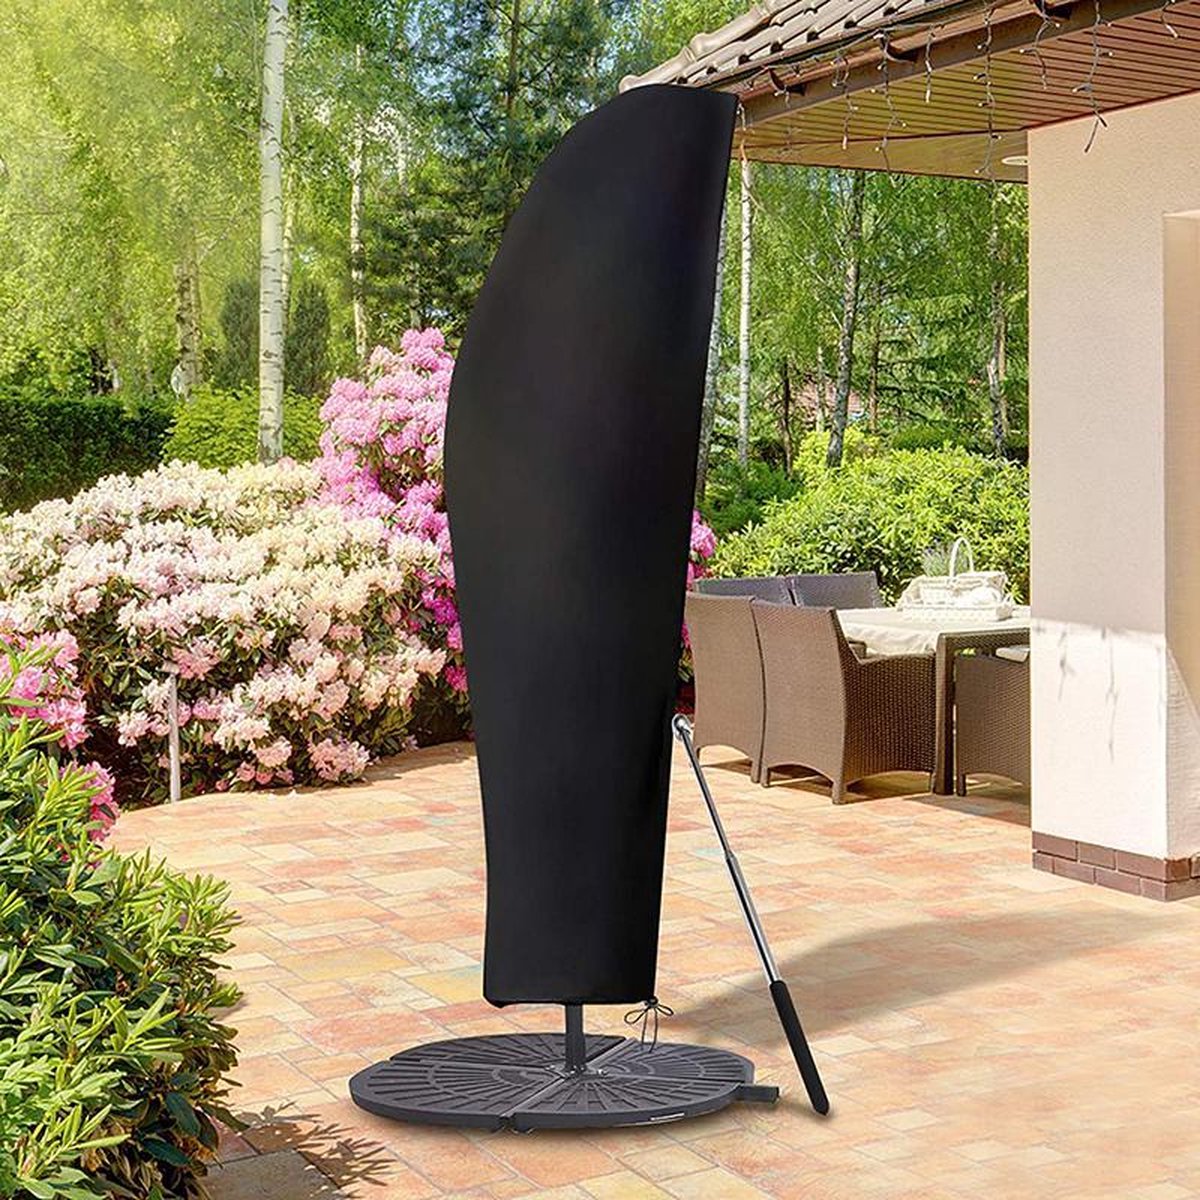 Meyro Lifestyle - Parasolhoes - Waterdicht - Winddicht - Hoes voor parasols - Tuin - Strand - Zwart - 280 cm - 210d Oxford Fabrics